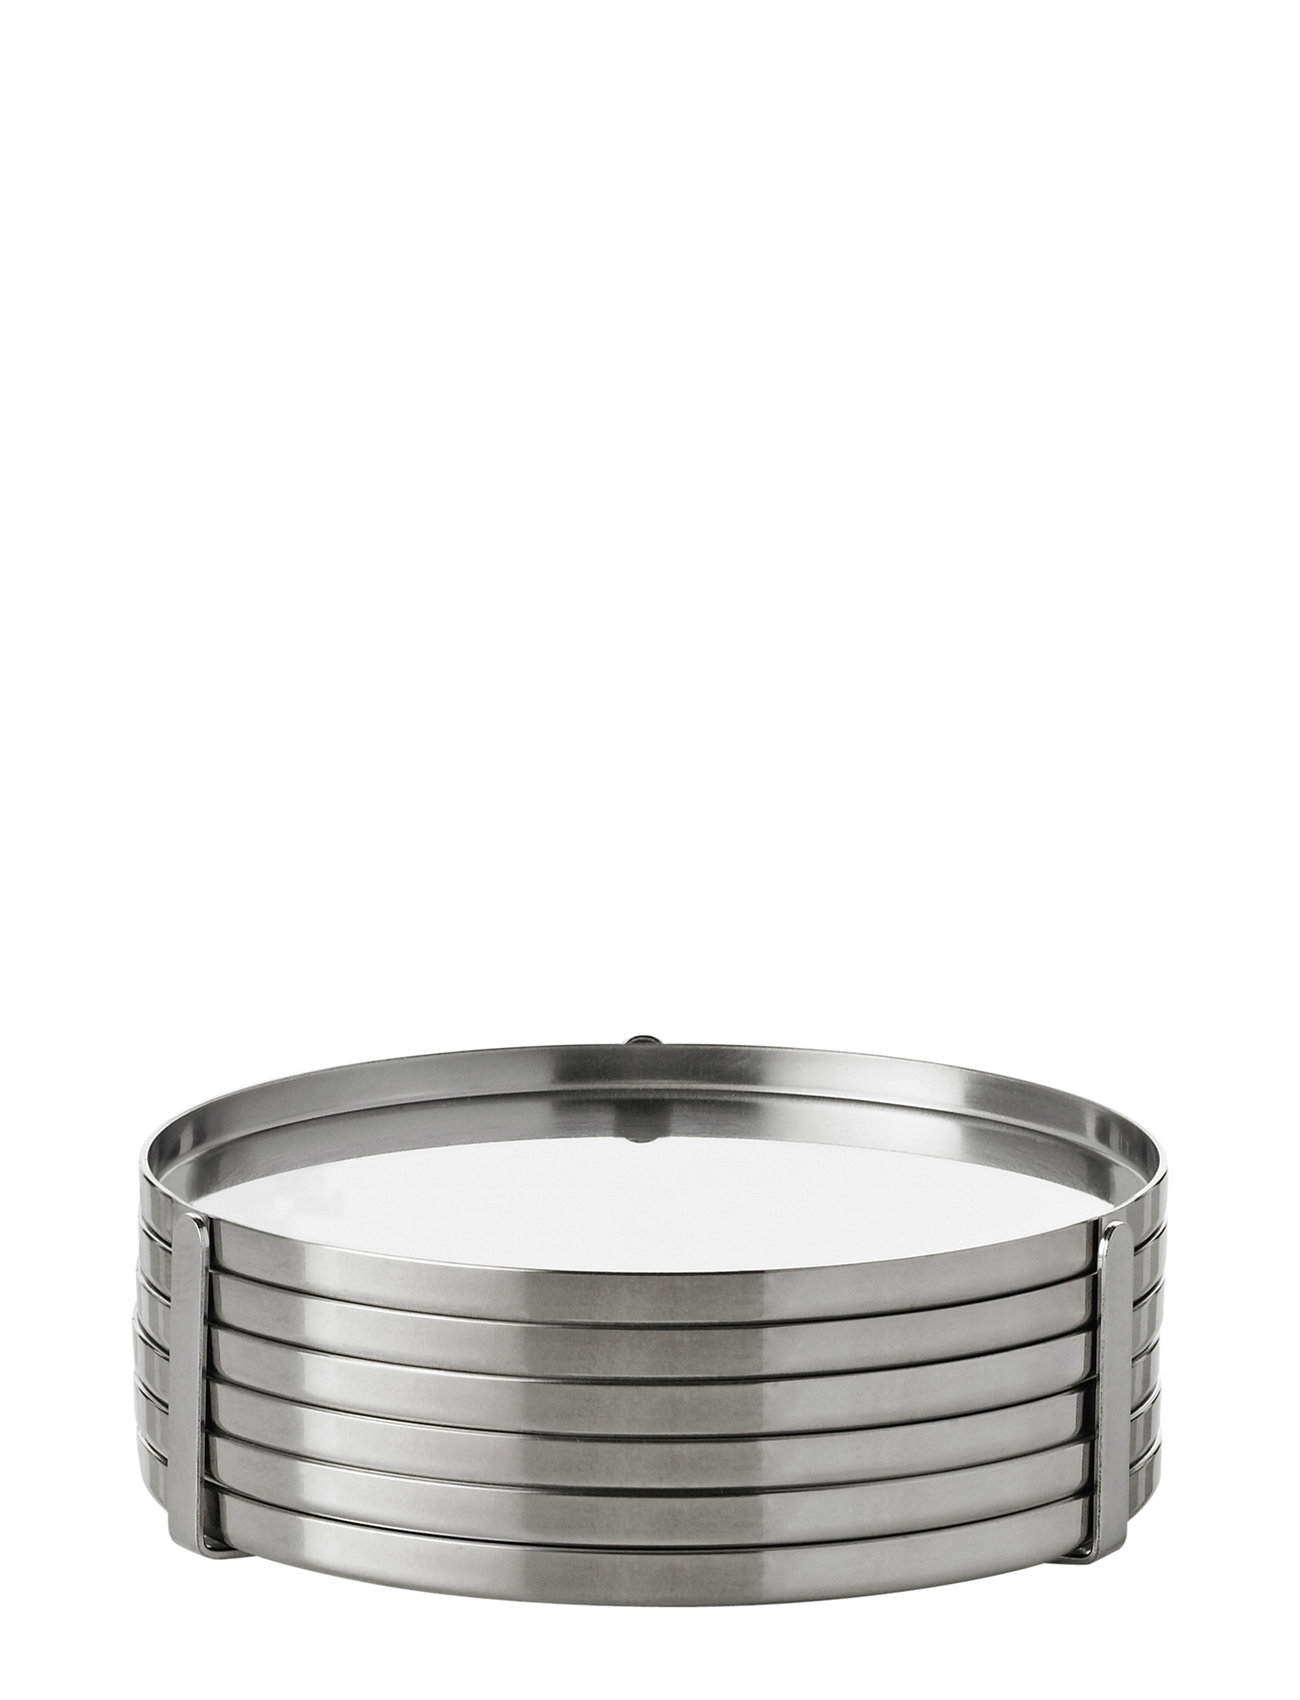 Arne Jacobsen Glasbakke Ø 8.5 Cm Steel Home Tableware Dining & Table Accessories Coasters Silver Stelton